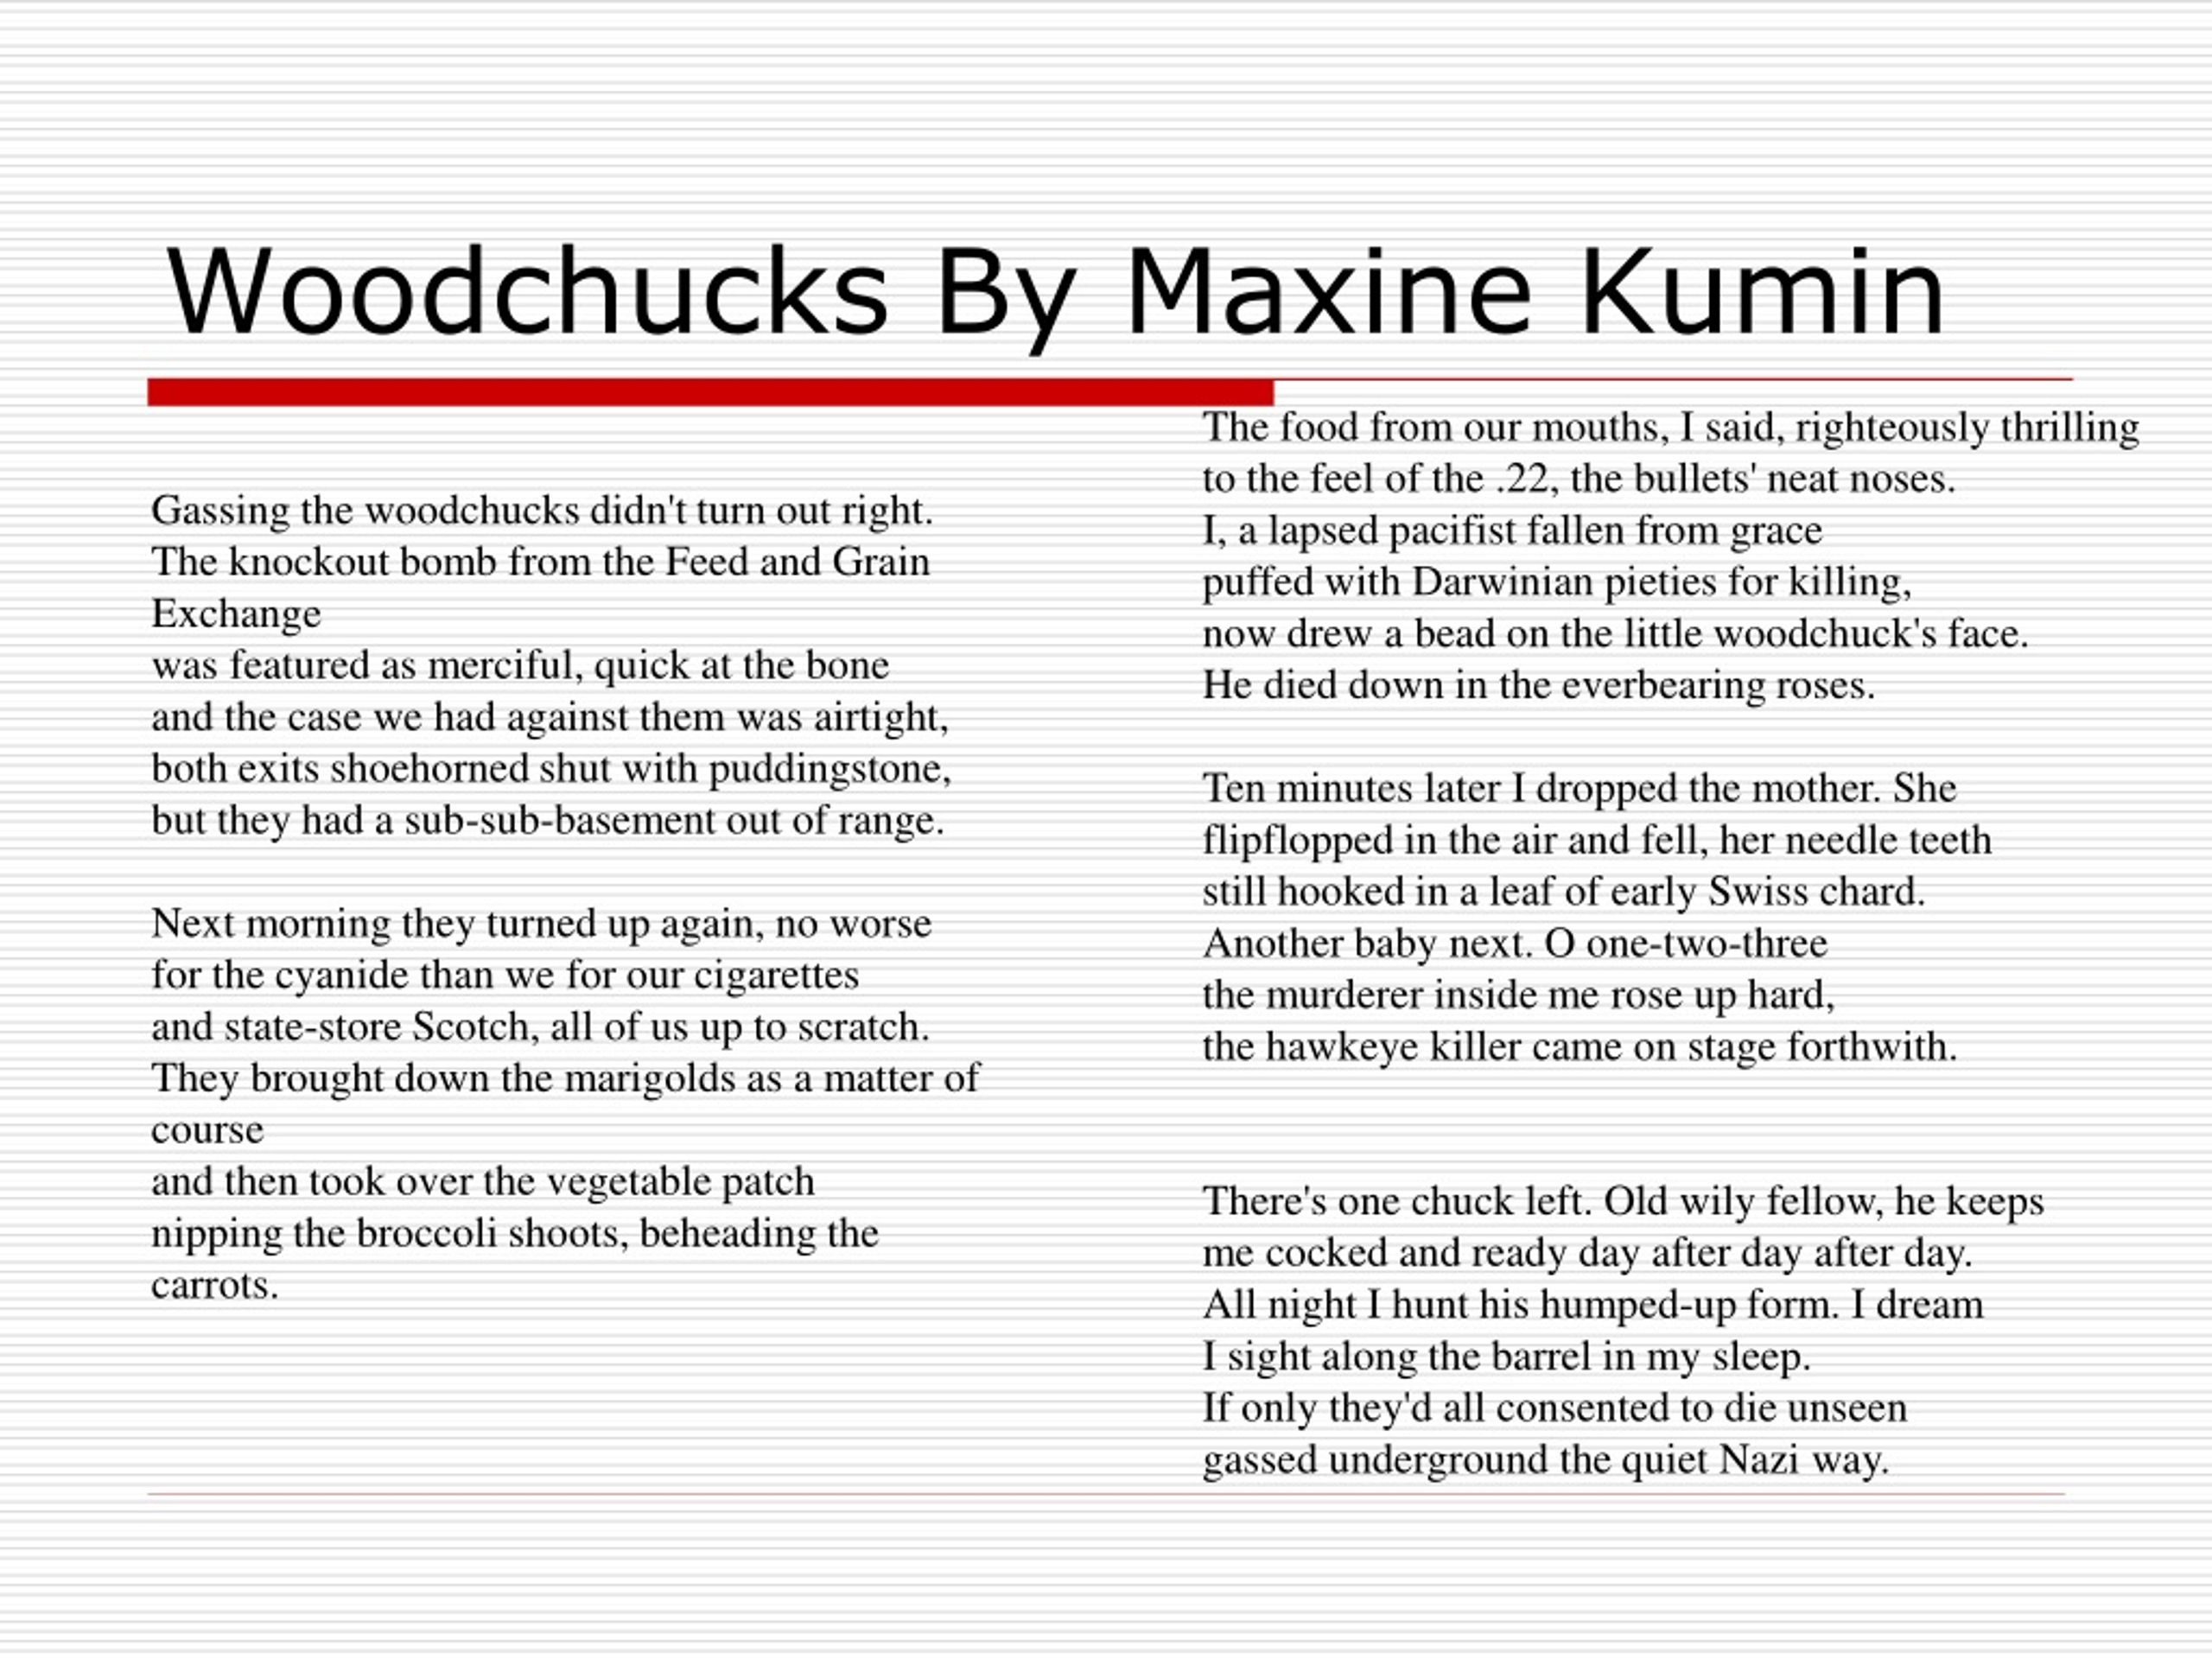 Analysis Of Maxe Kumins Woodchucks